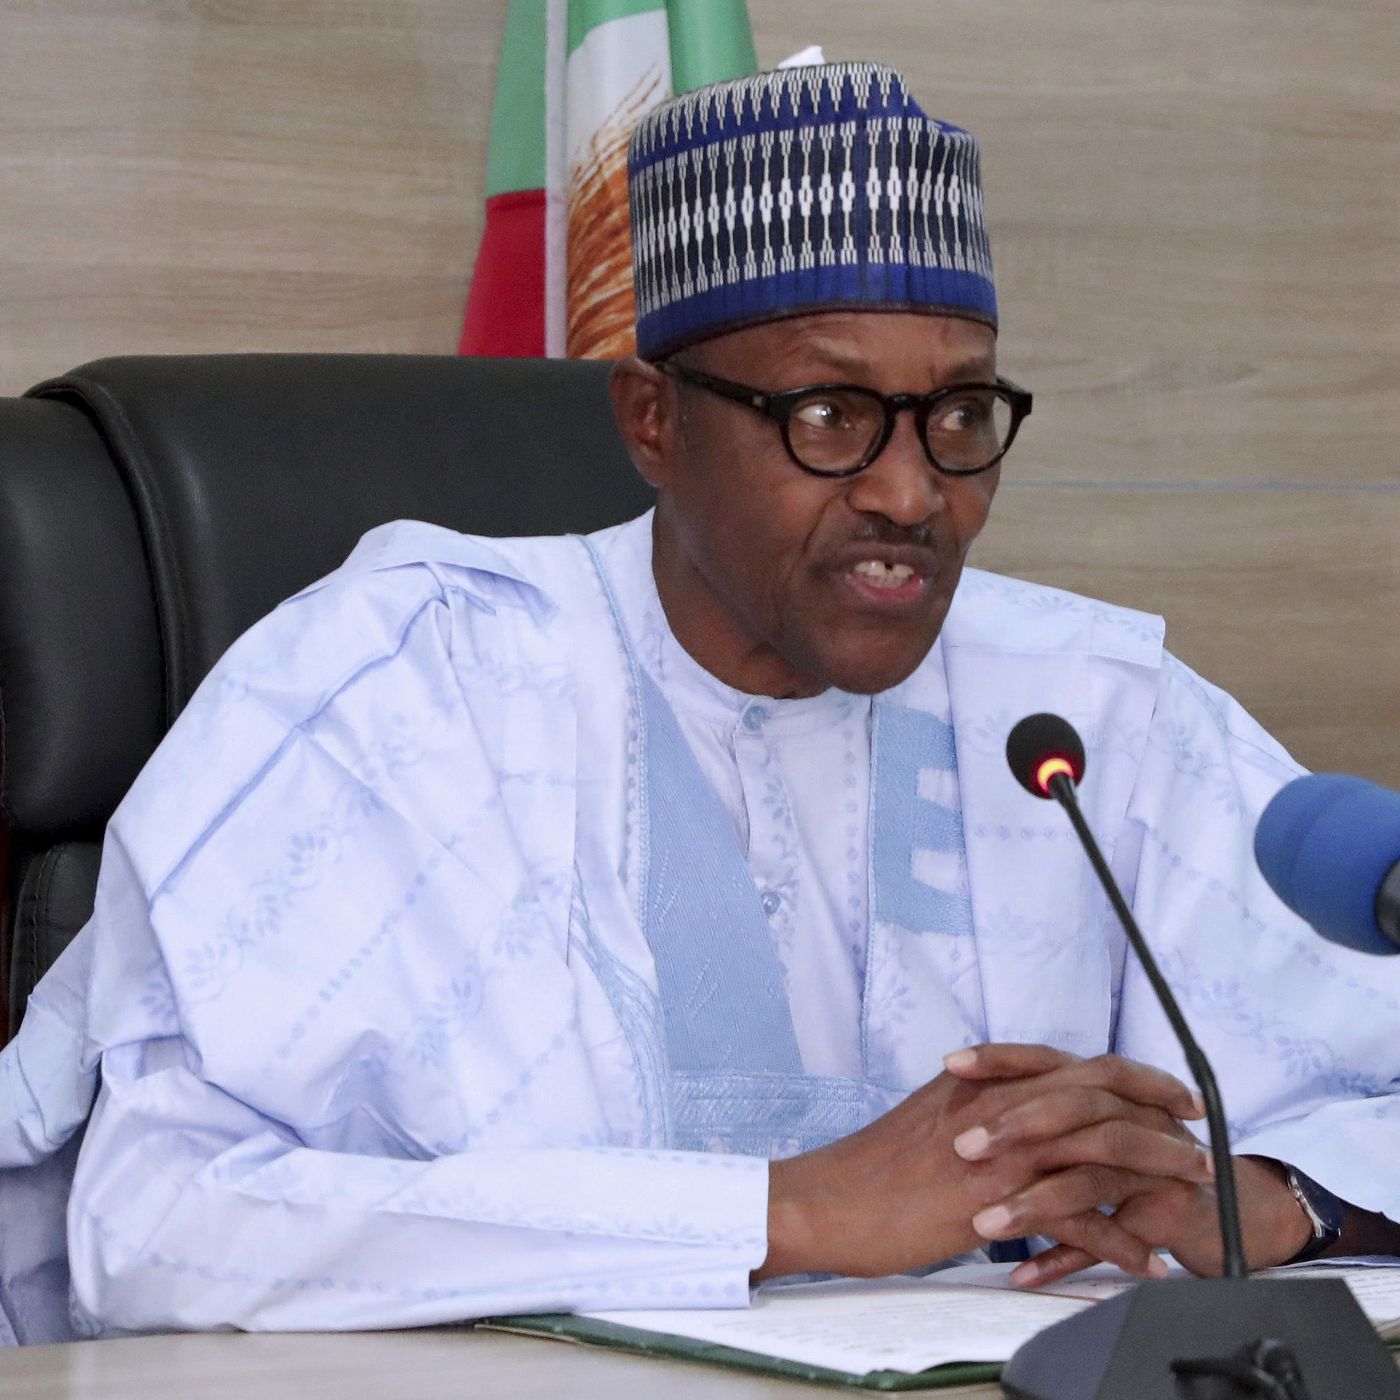 Nigerian President Muhammadu Buhari wins second term - Vox